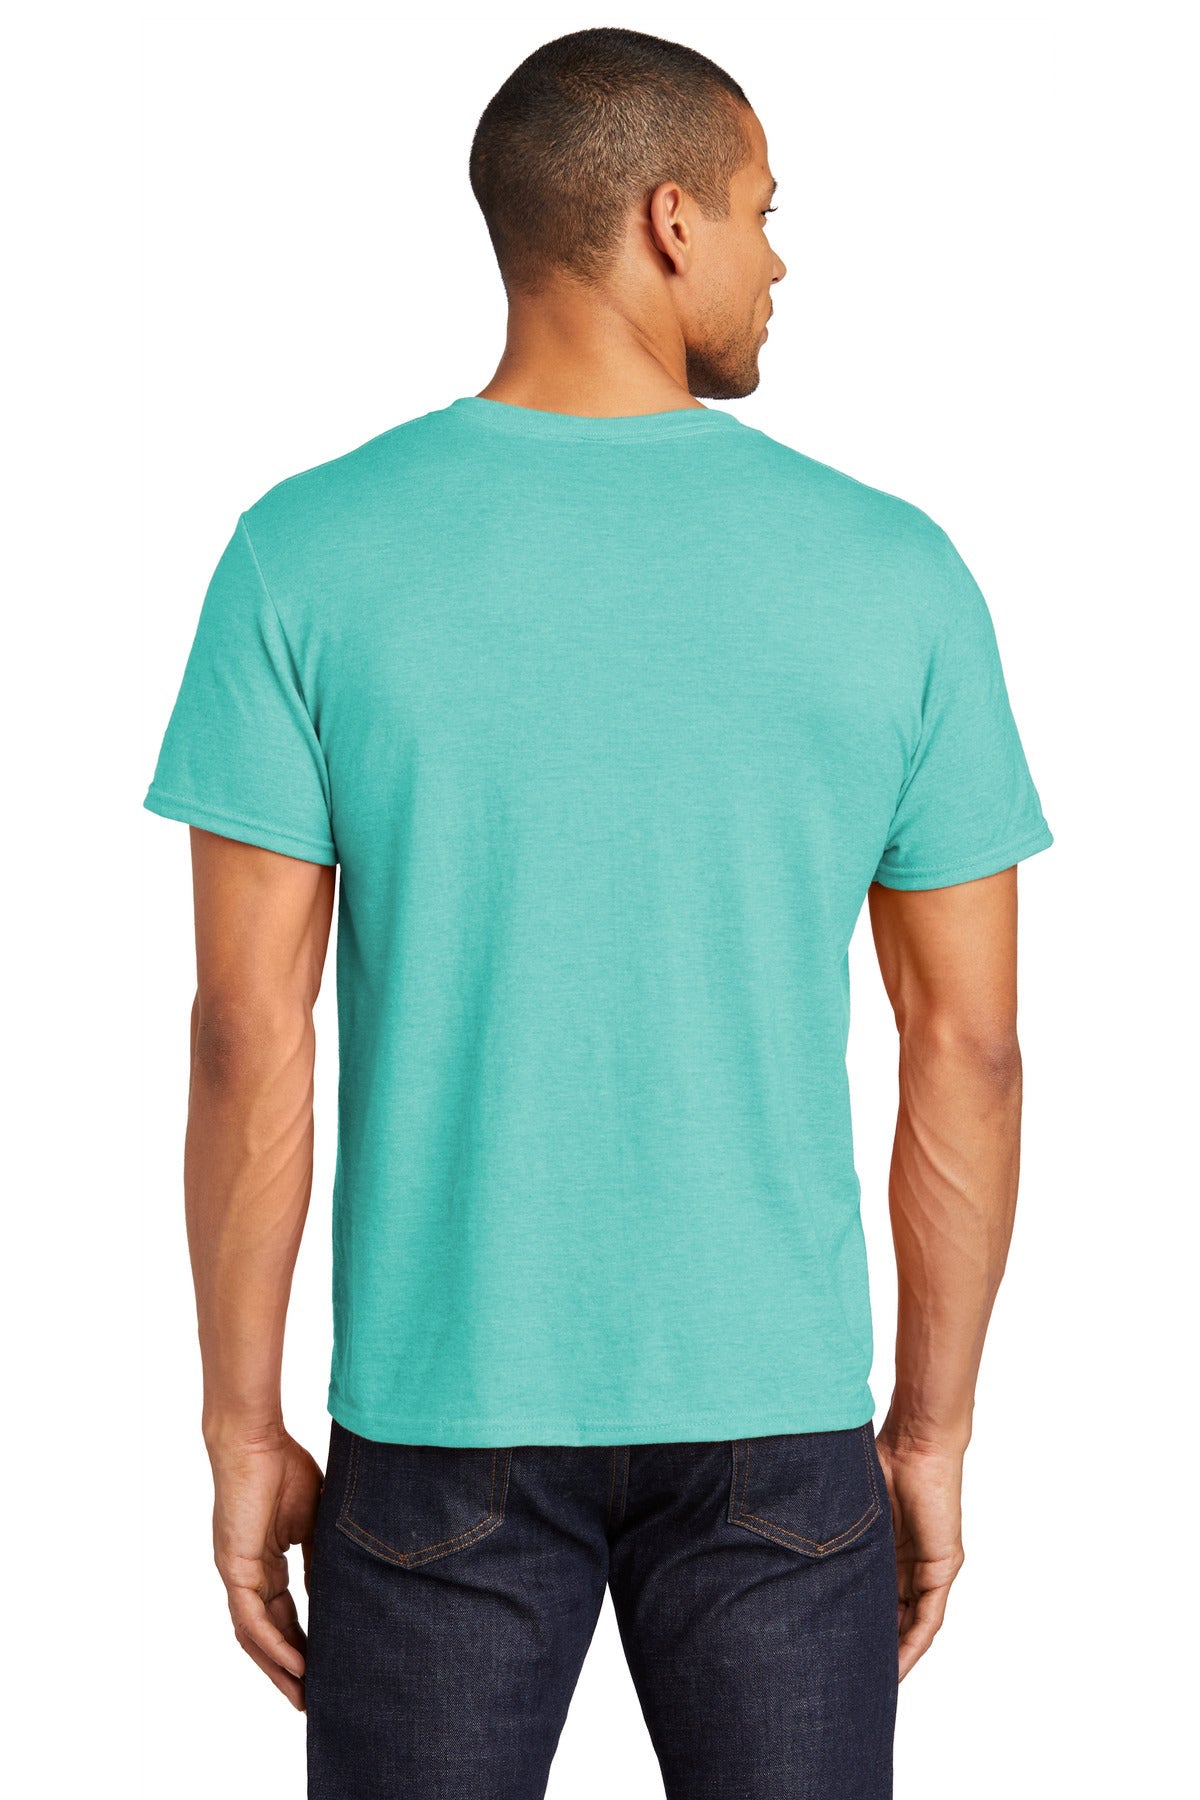 JERZEES® Premium Blend Ring Spun T-Shirt 560M [Scuba Blue] - DFW Impression